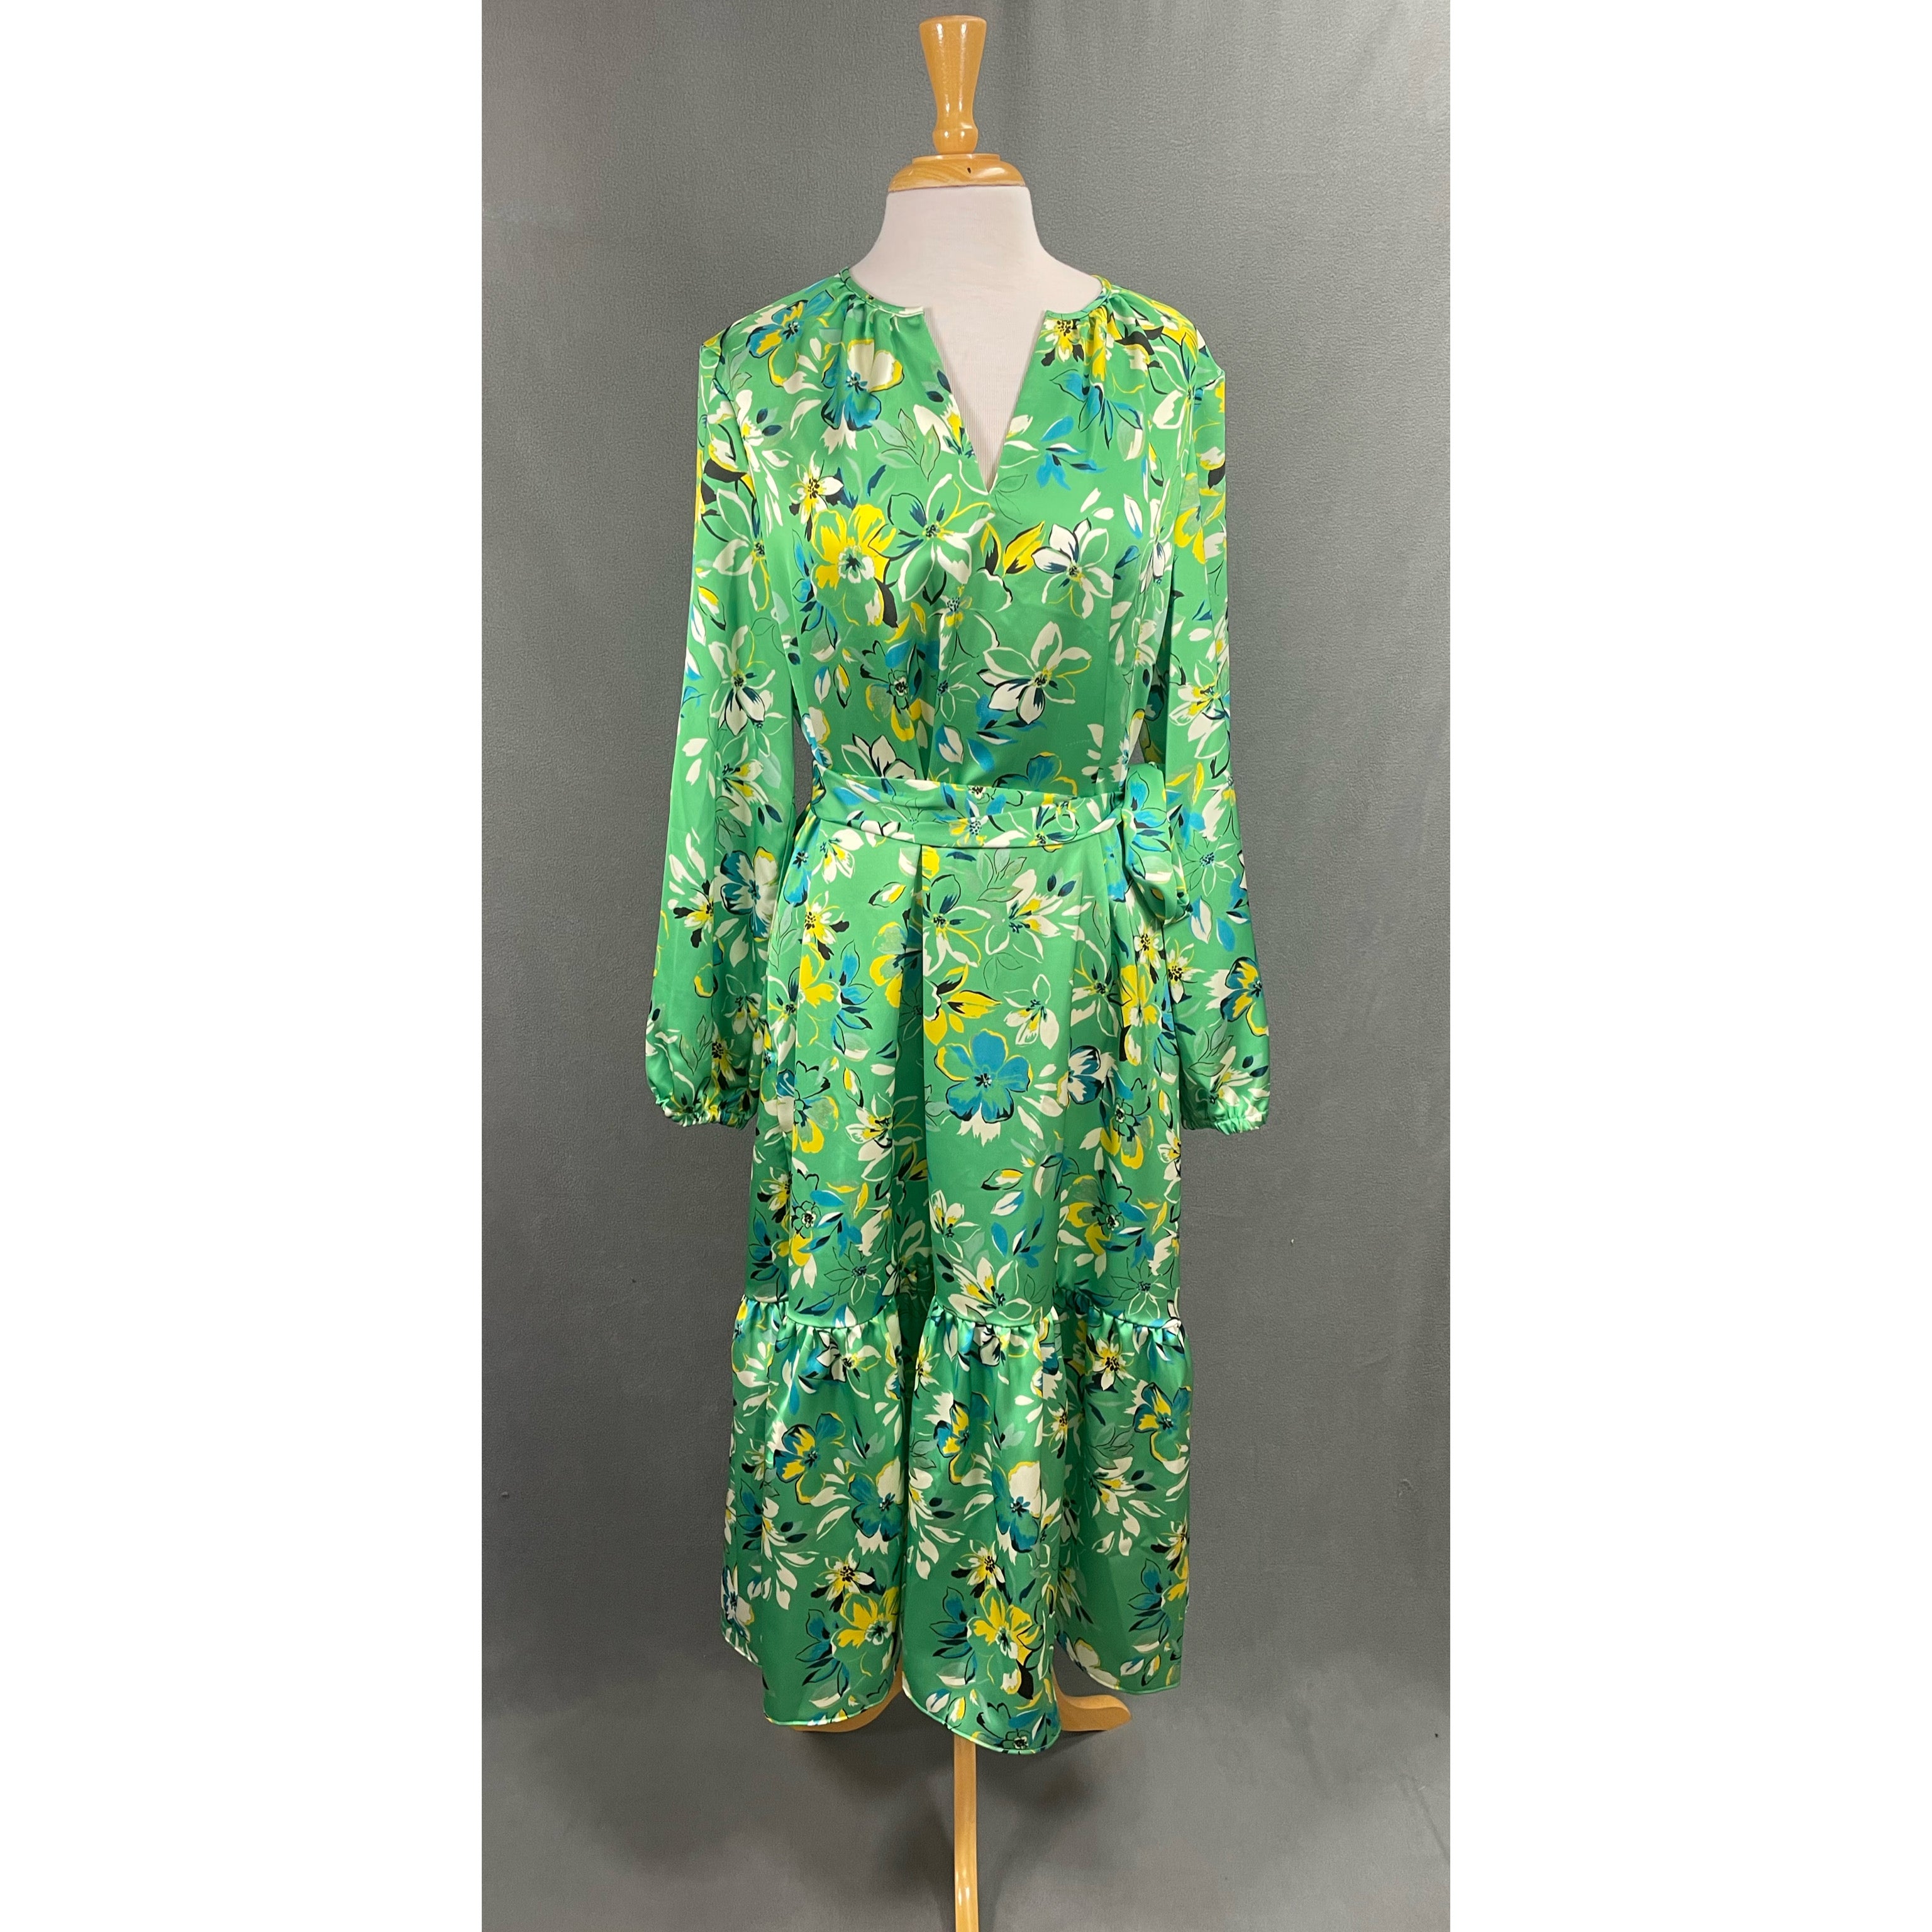 Ann Mashburn green floral dress, size L